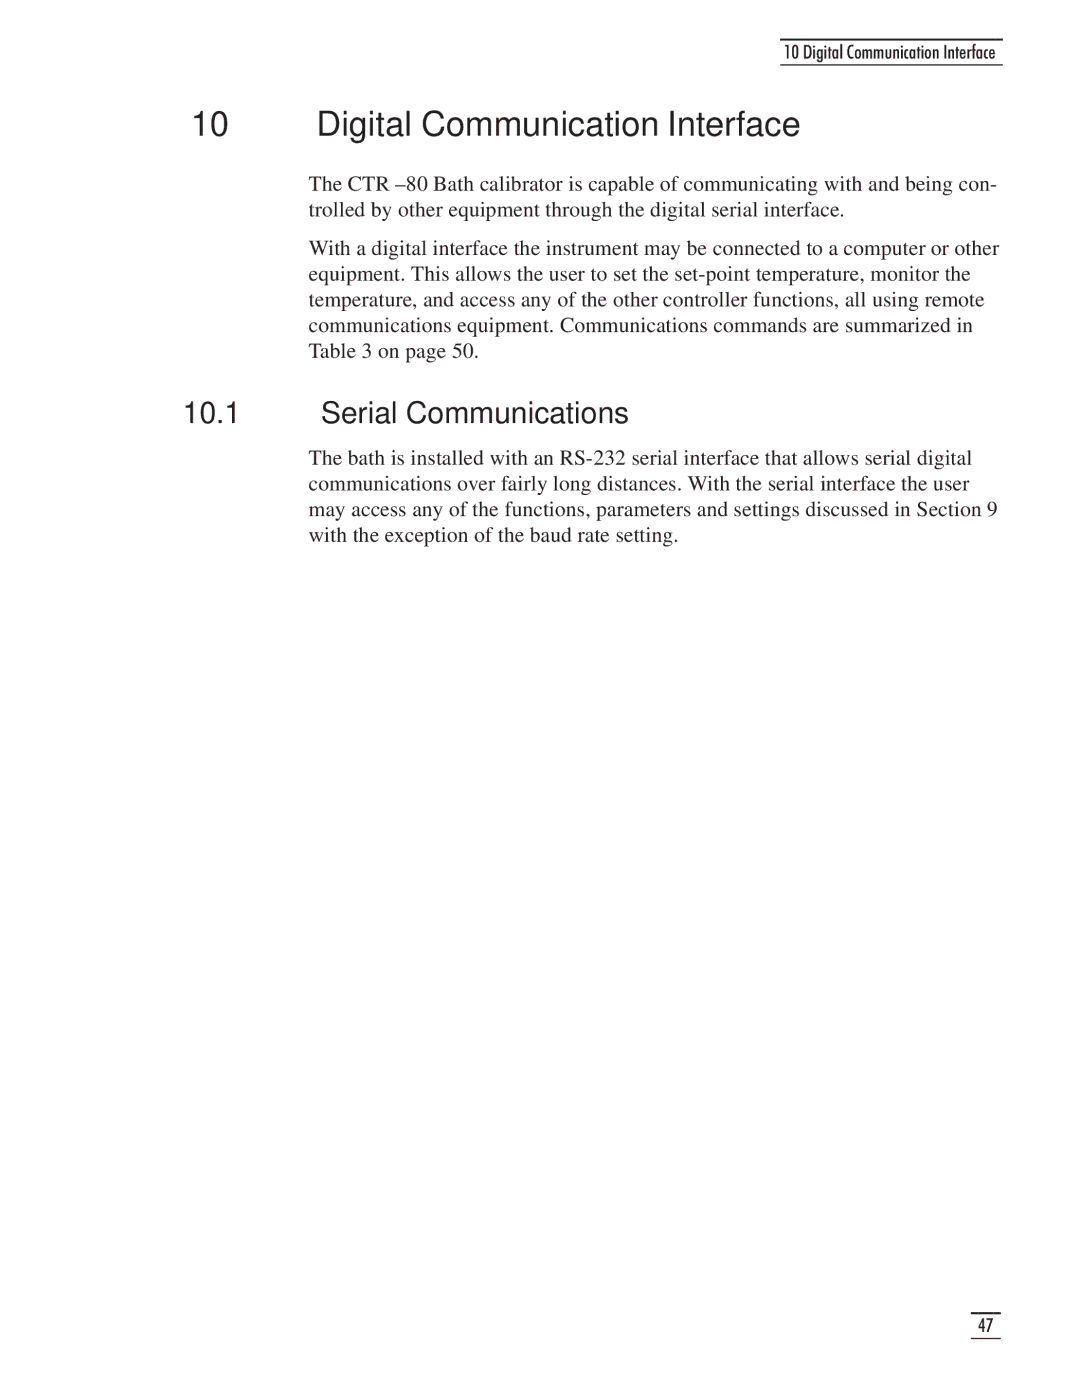 GE CTR 80 manual Digital Communication Interface, Serial Communications 